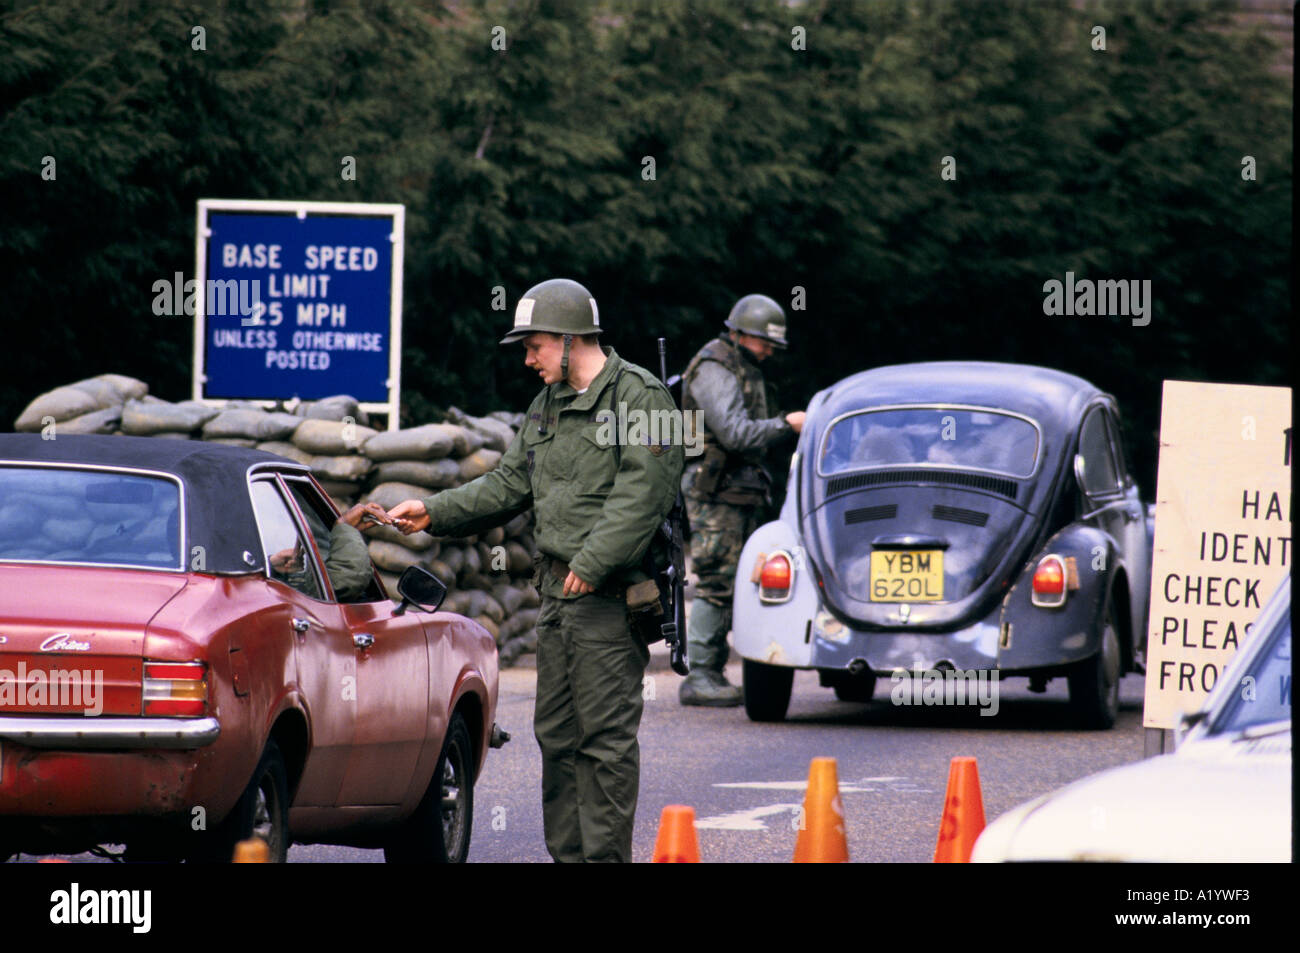 RAF LAKENHEATH USAF SECURITY AFTER THE US BOMBING OF TRIPOLI 15 4 86 1986 Stock Photo